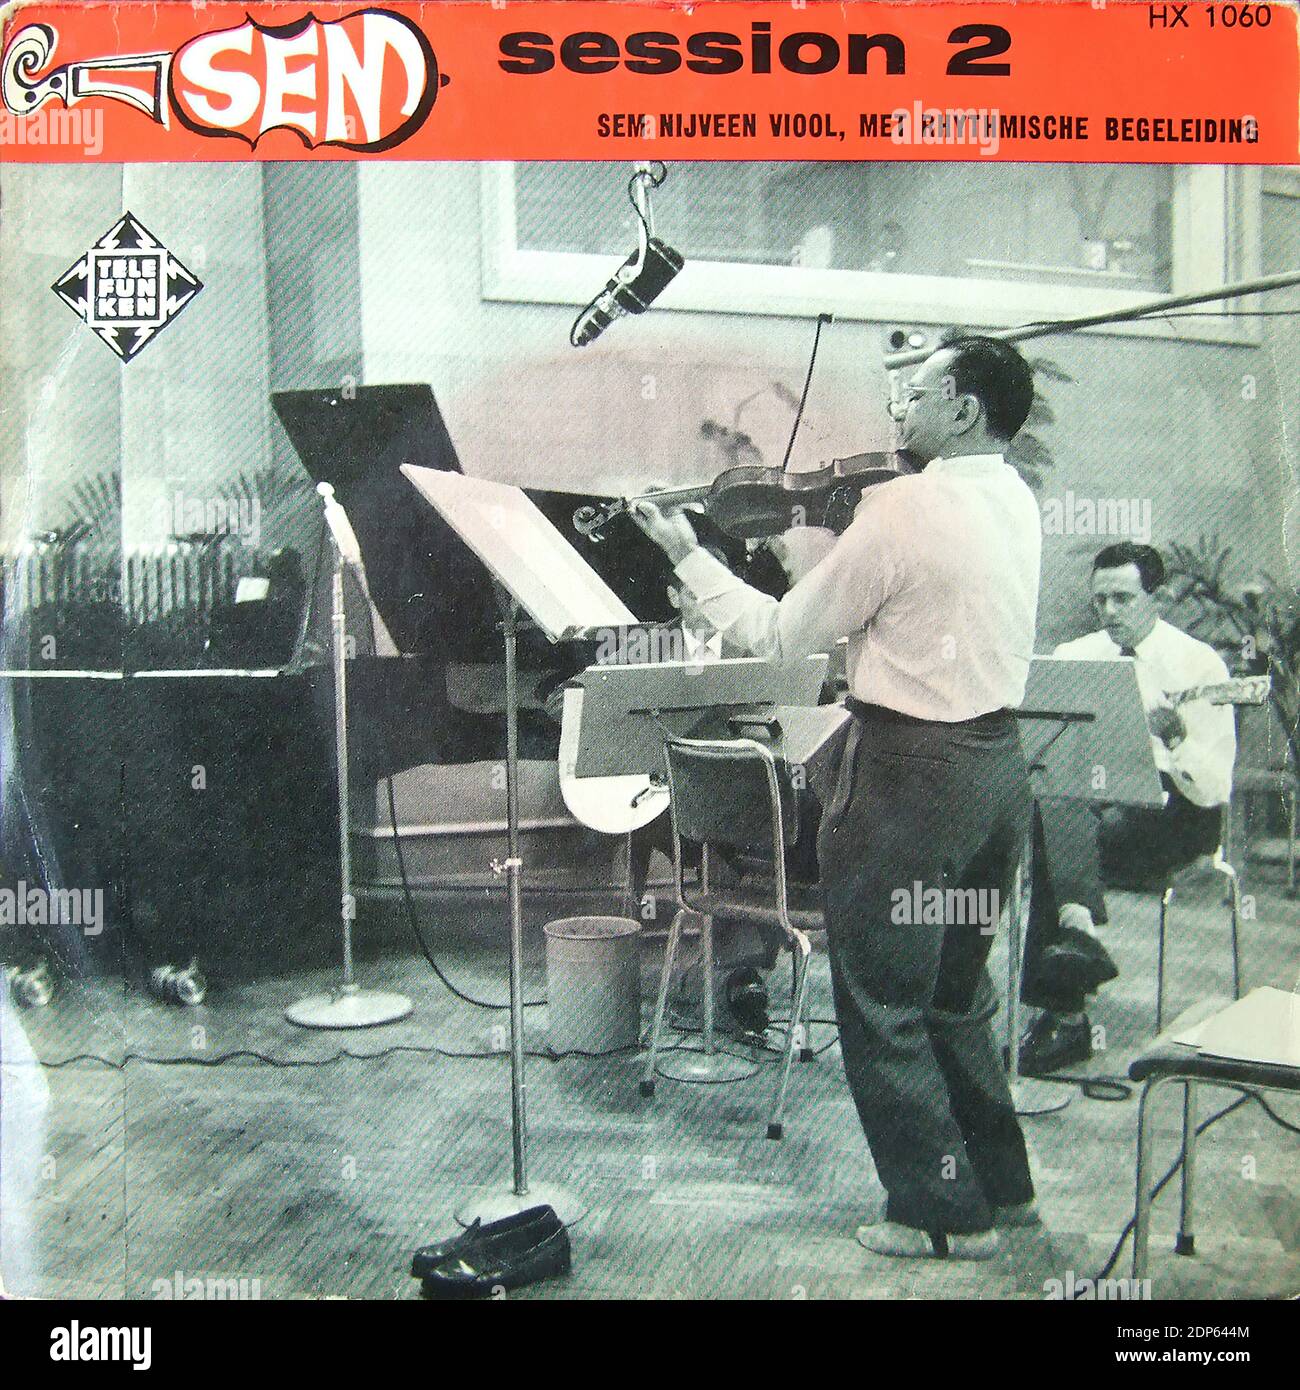 SEM Session 2 - Sem Nijveen Viool, met rhytmische begeleiding, Telefunken HX 1060, 7inch Single - Vintage vinyl album cover Stock Photo